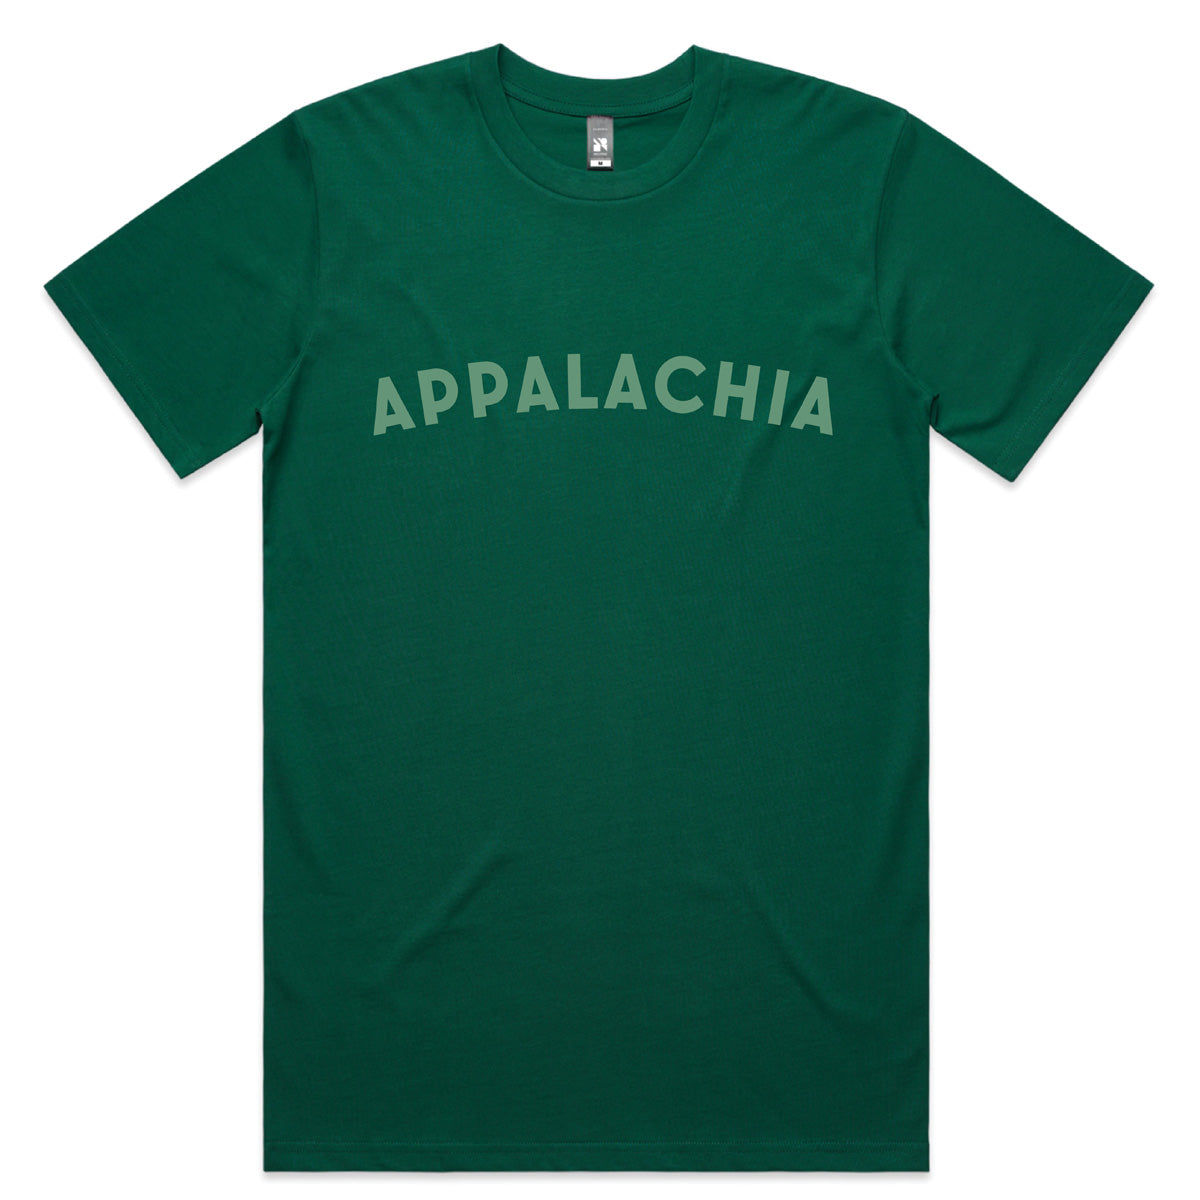 Appalachia T-Shirt (Forest Green)